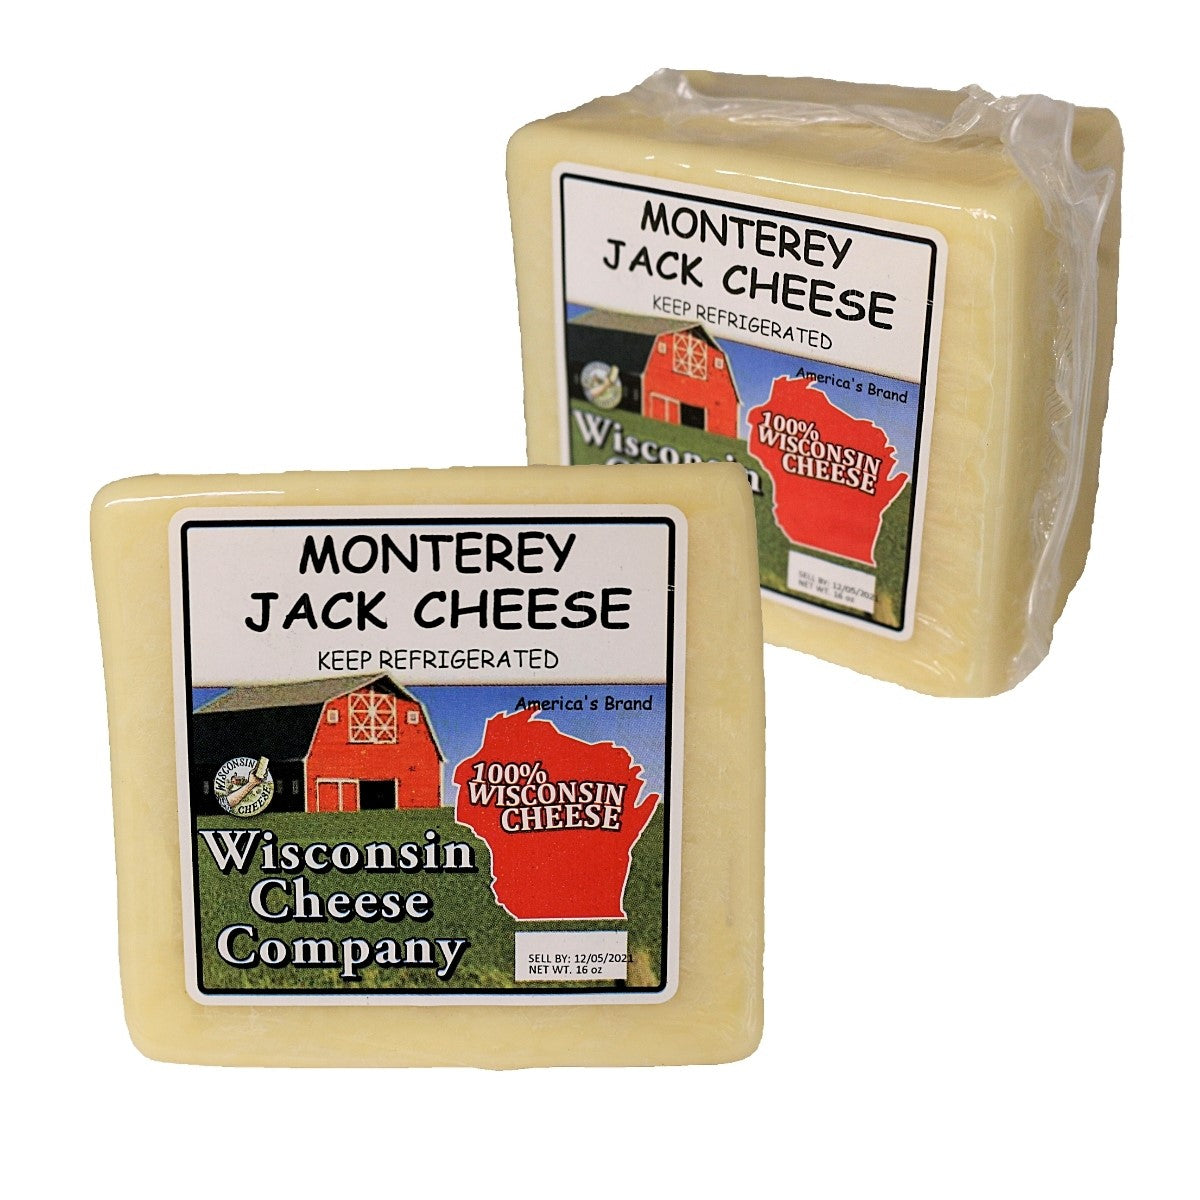 Two blocks of Monterey Jack Cheese